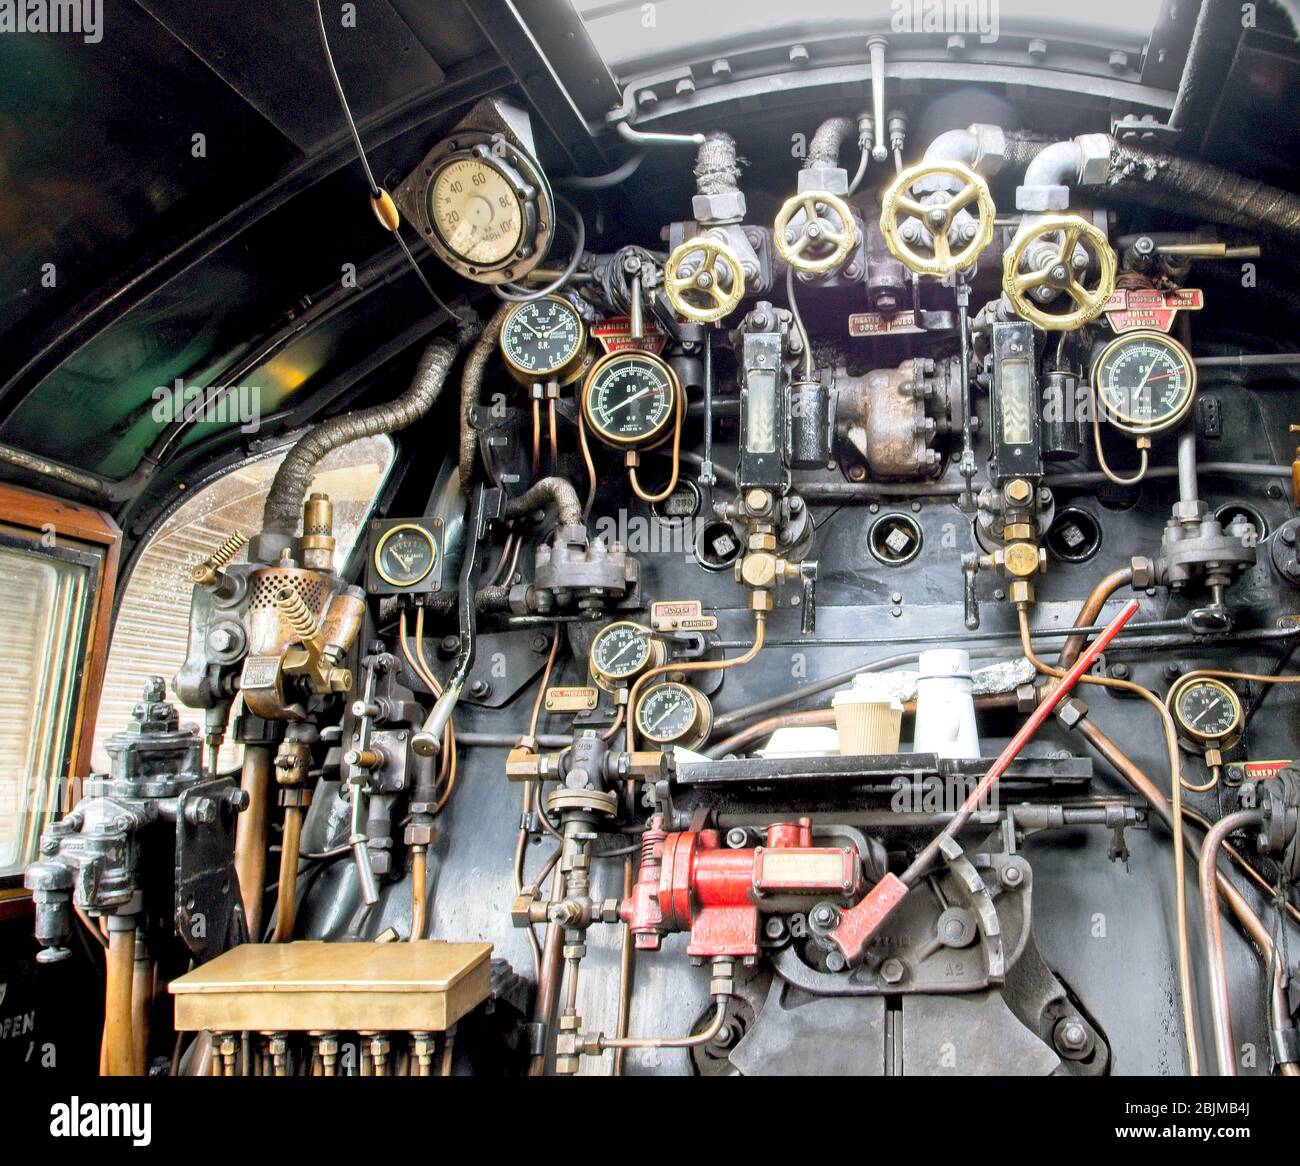 Inside the cab of mainline steam locomotive. Stock Photo